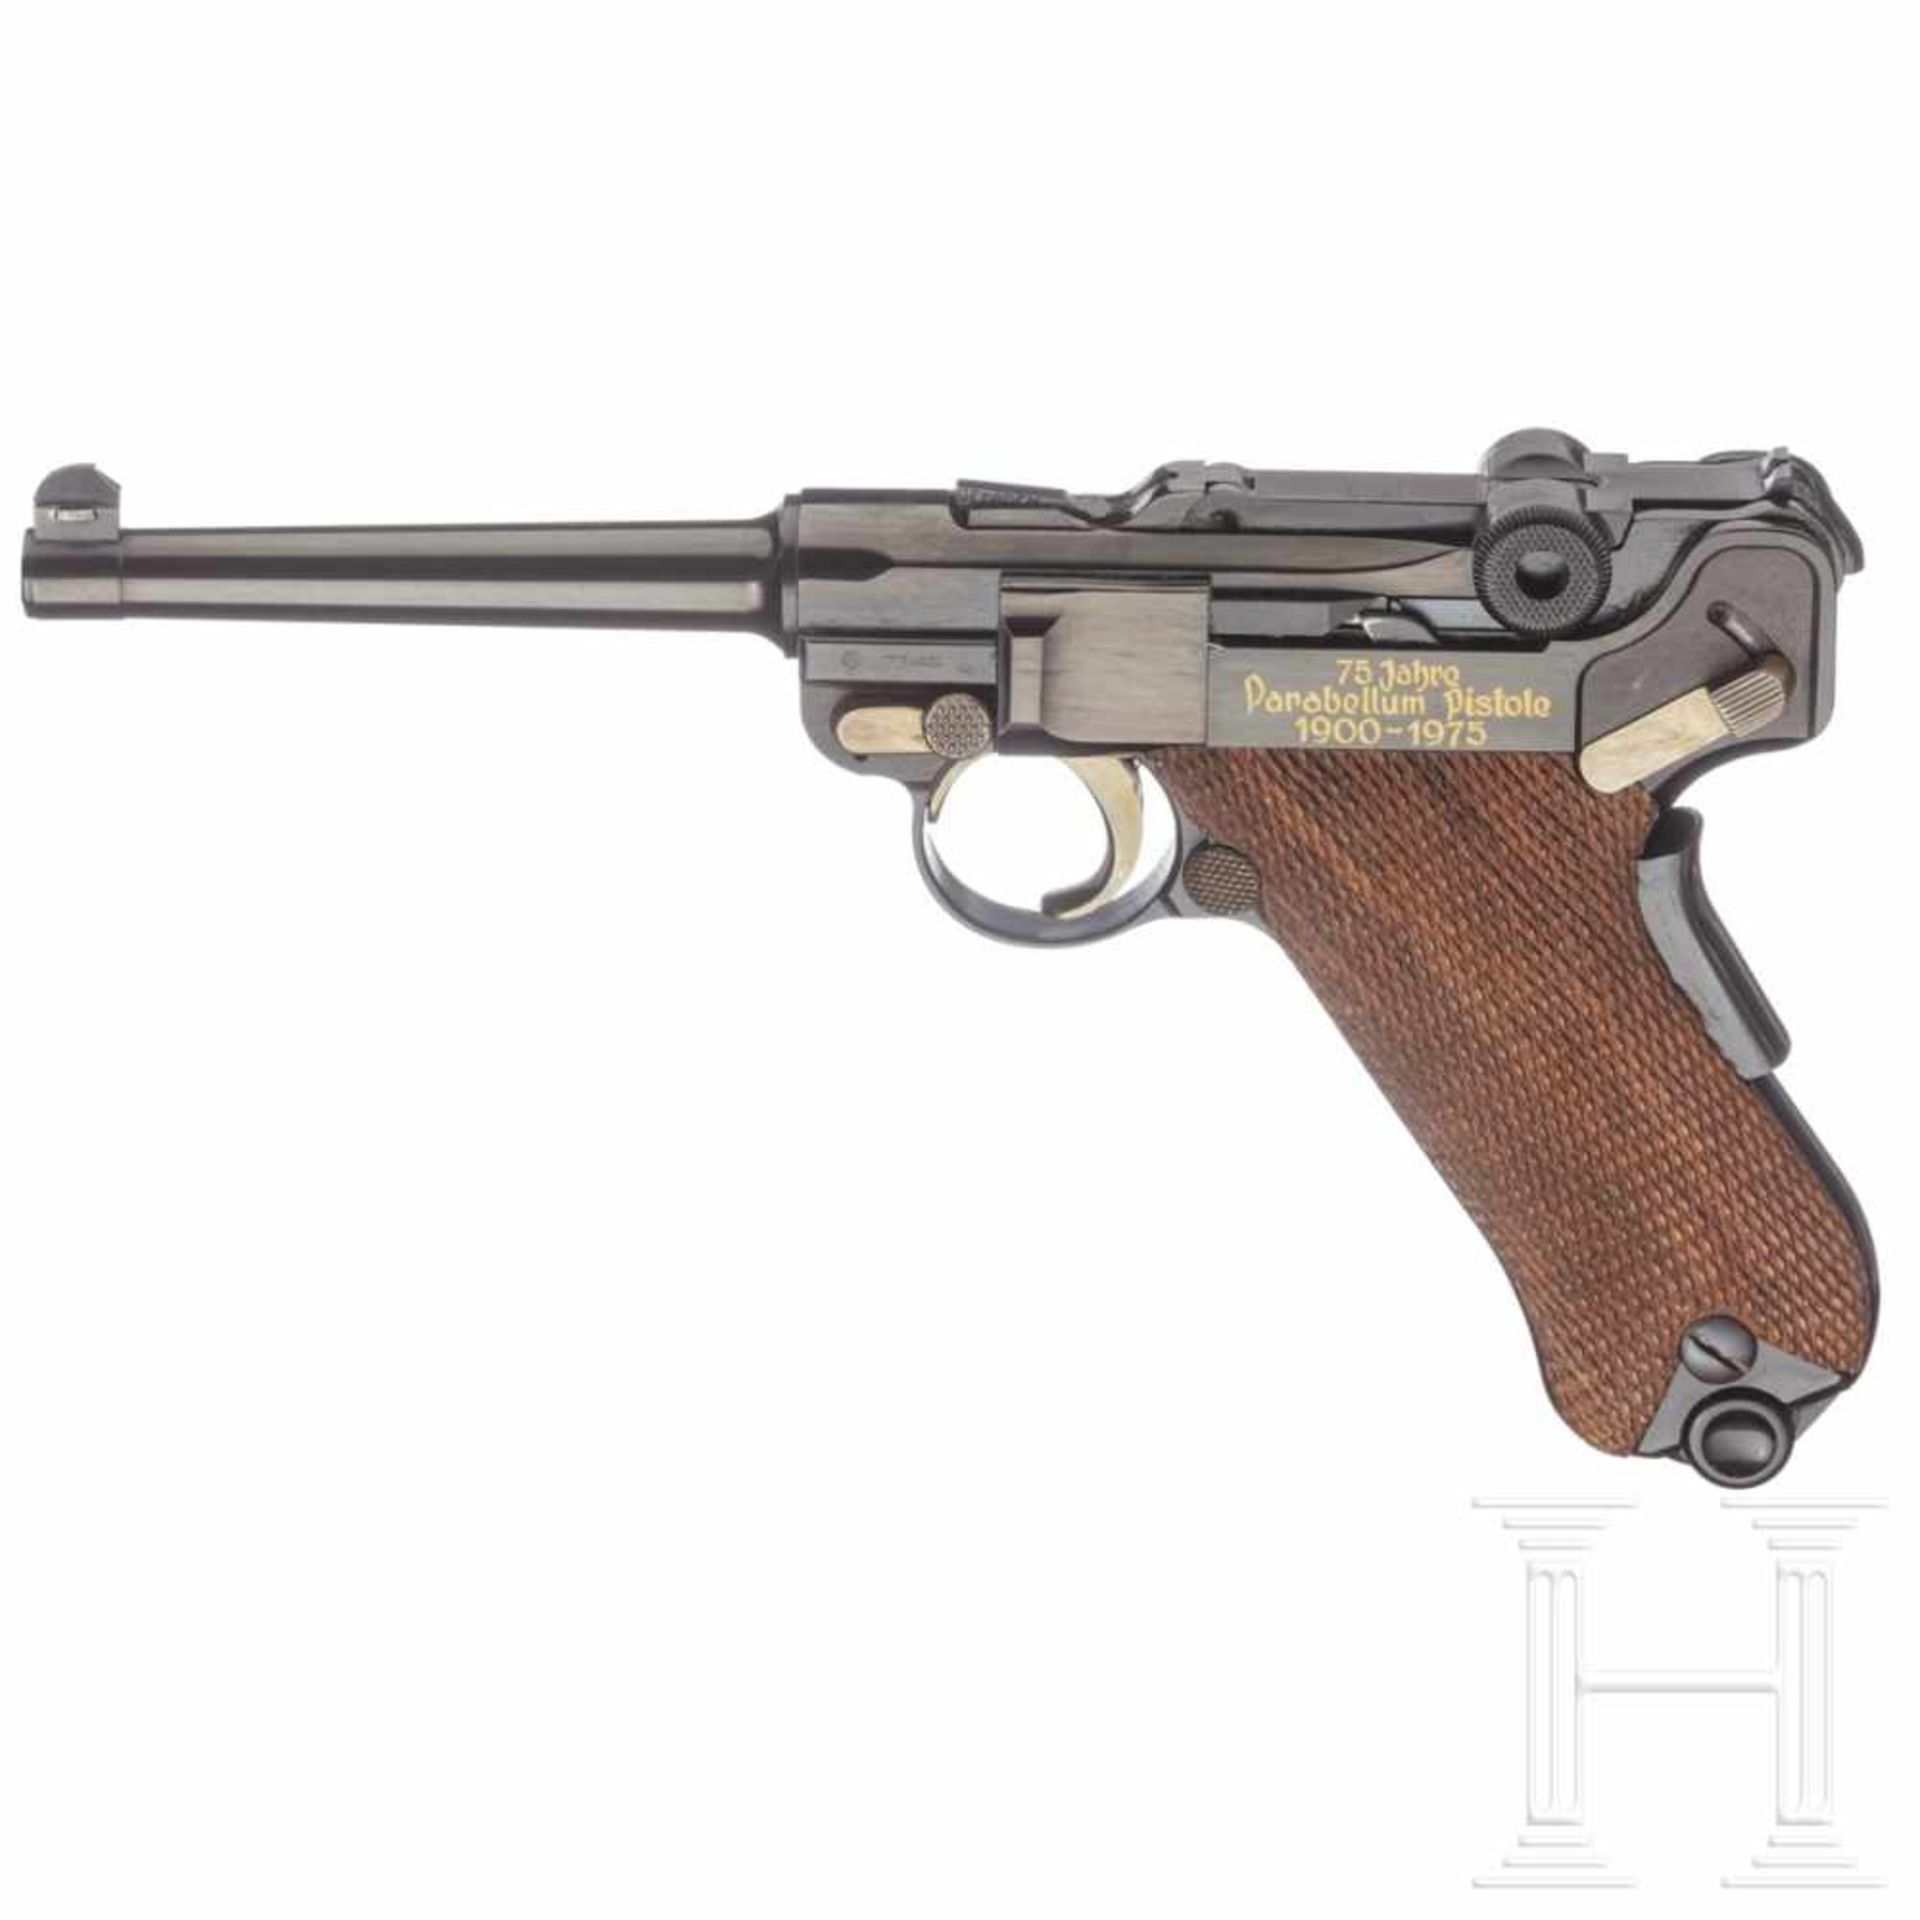 A P08/75 Mauser commemorativel "75 years Parabellum Pistol"Cal. 7.65 mm Luger, no. 176/250, matching